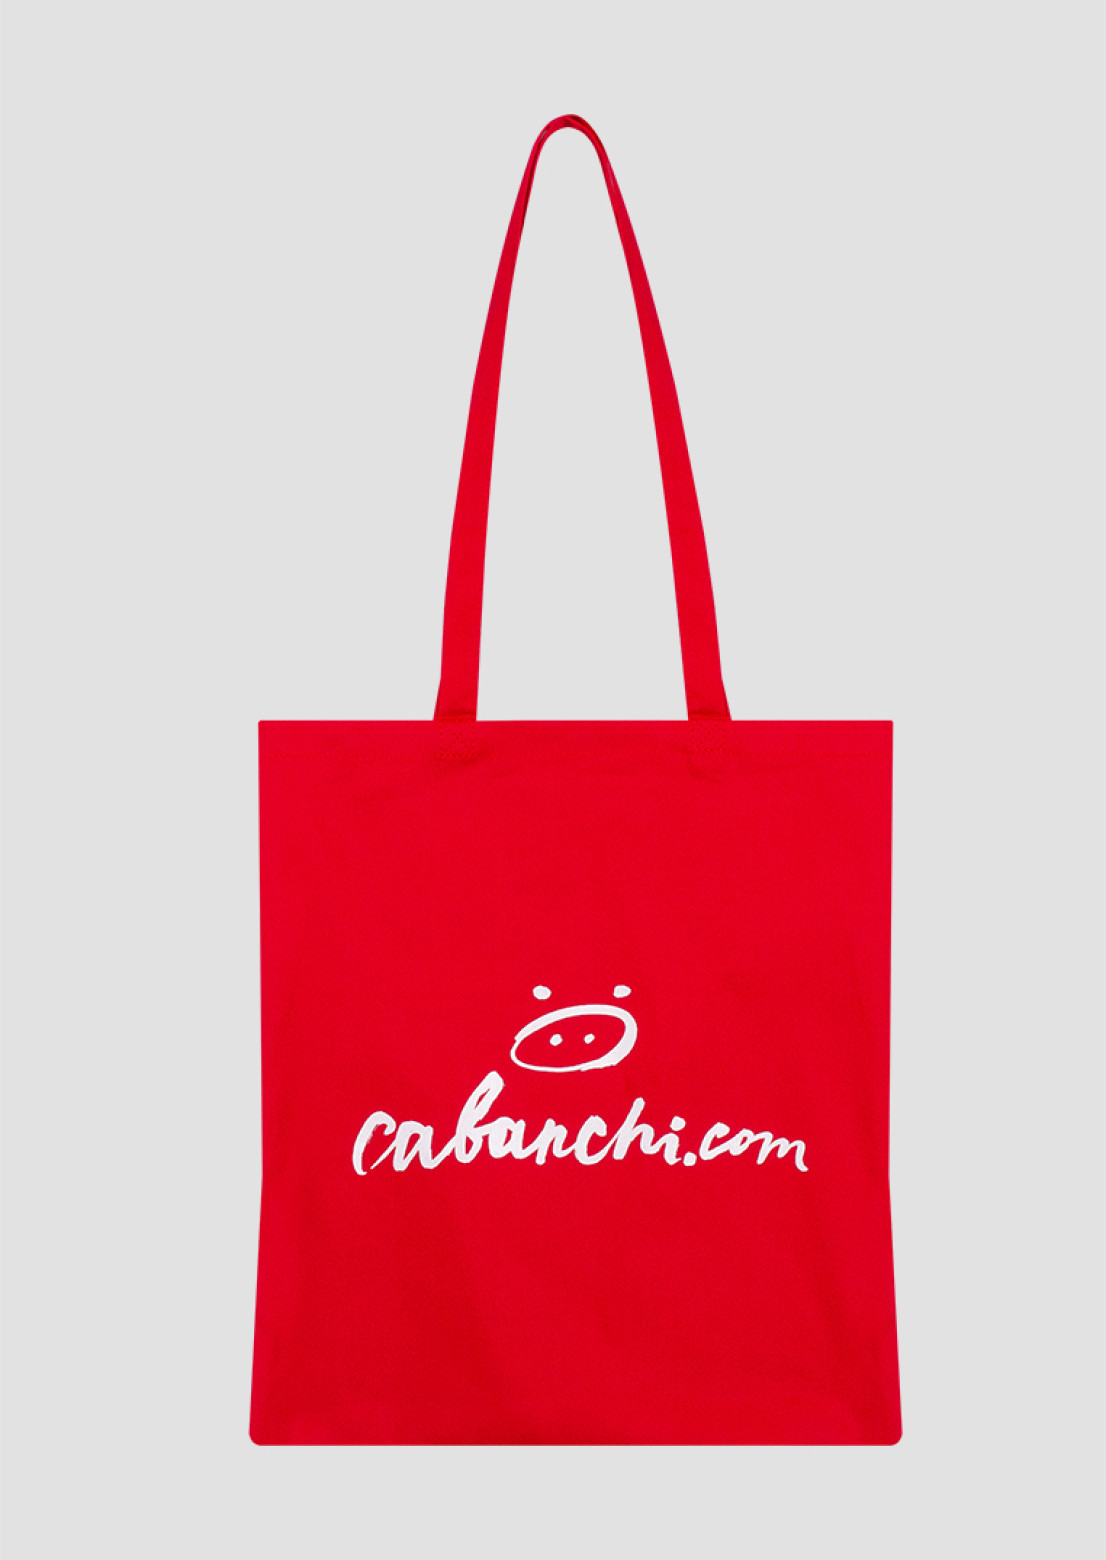 Red bag with "Cabanchi.com" print